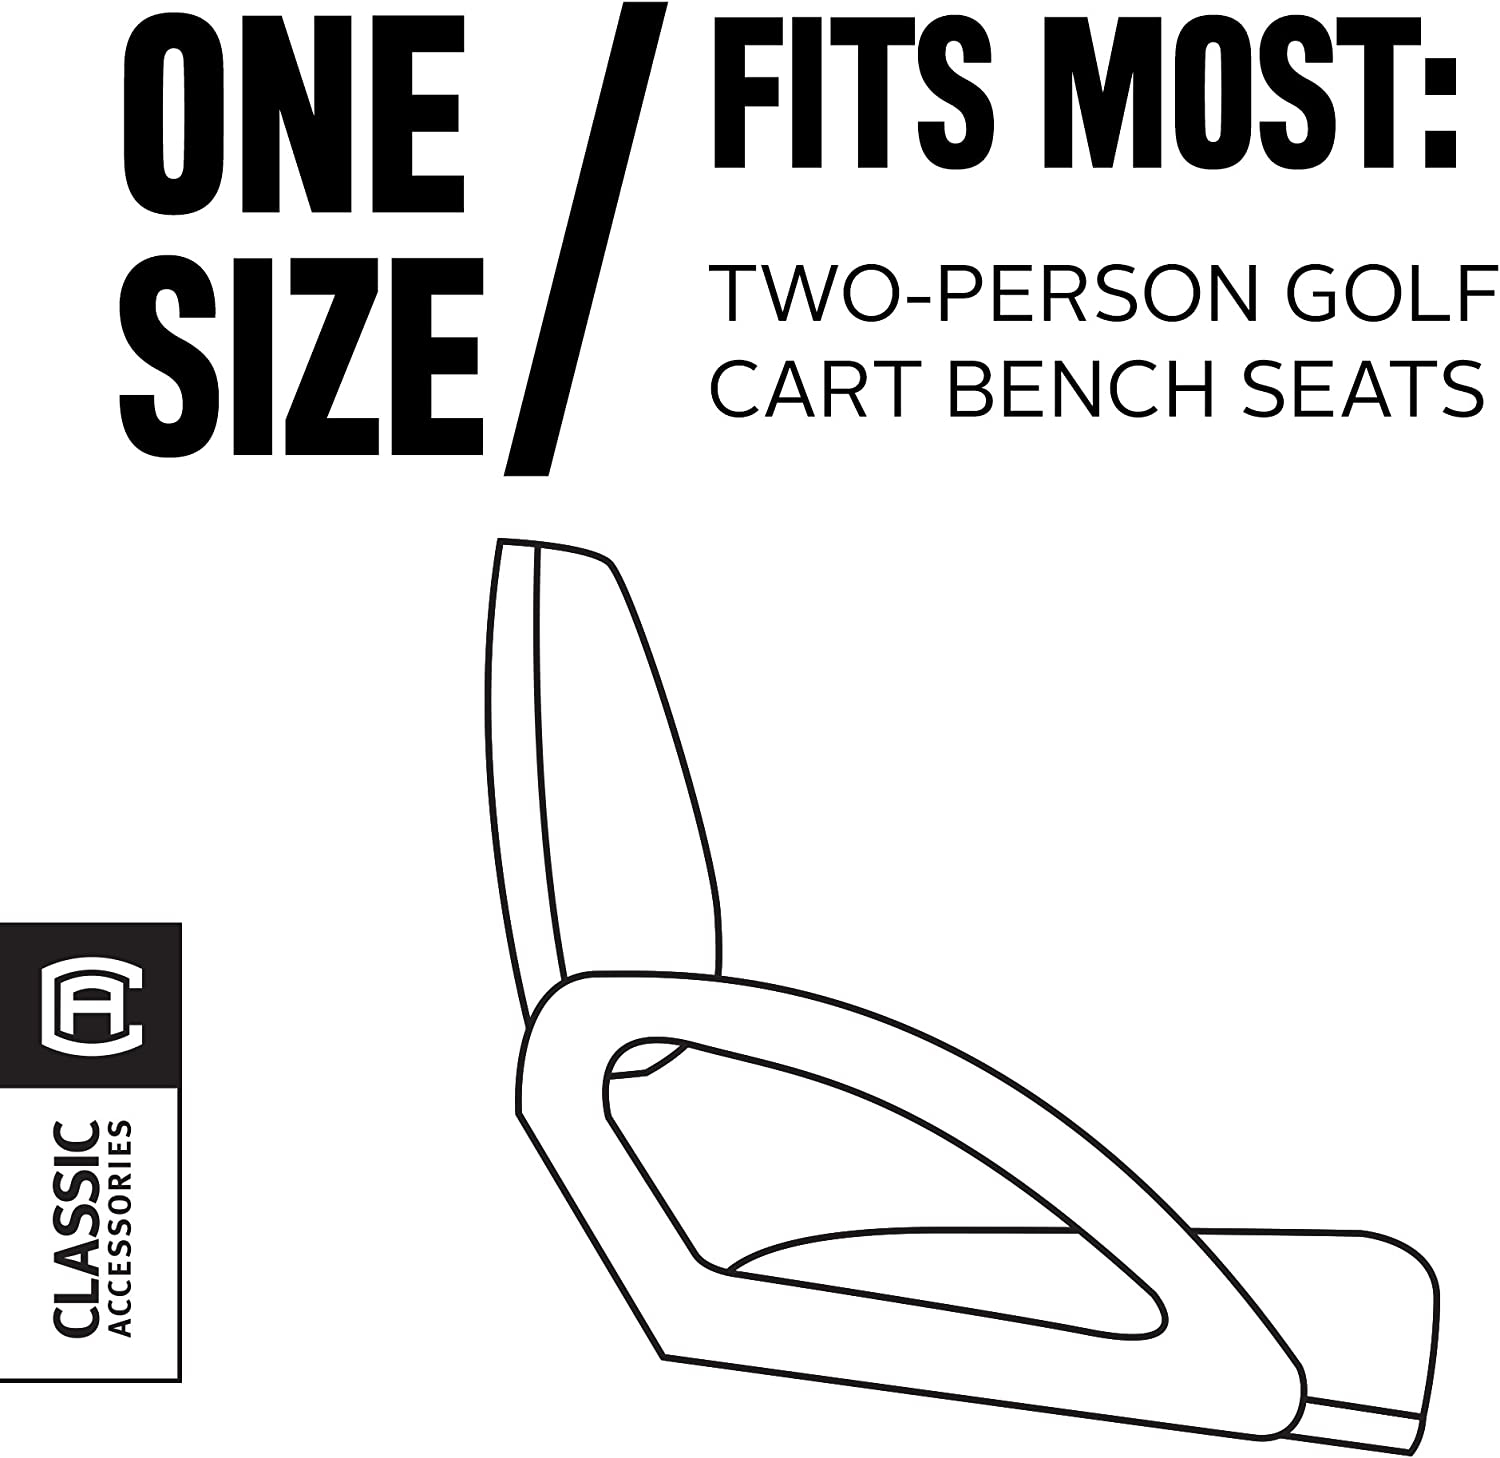 Classic Accessories Fairway Golf Cart Seat Blanket/Cover